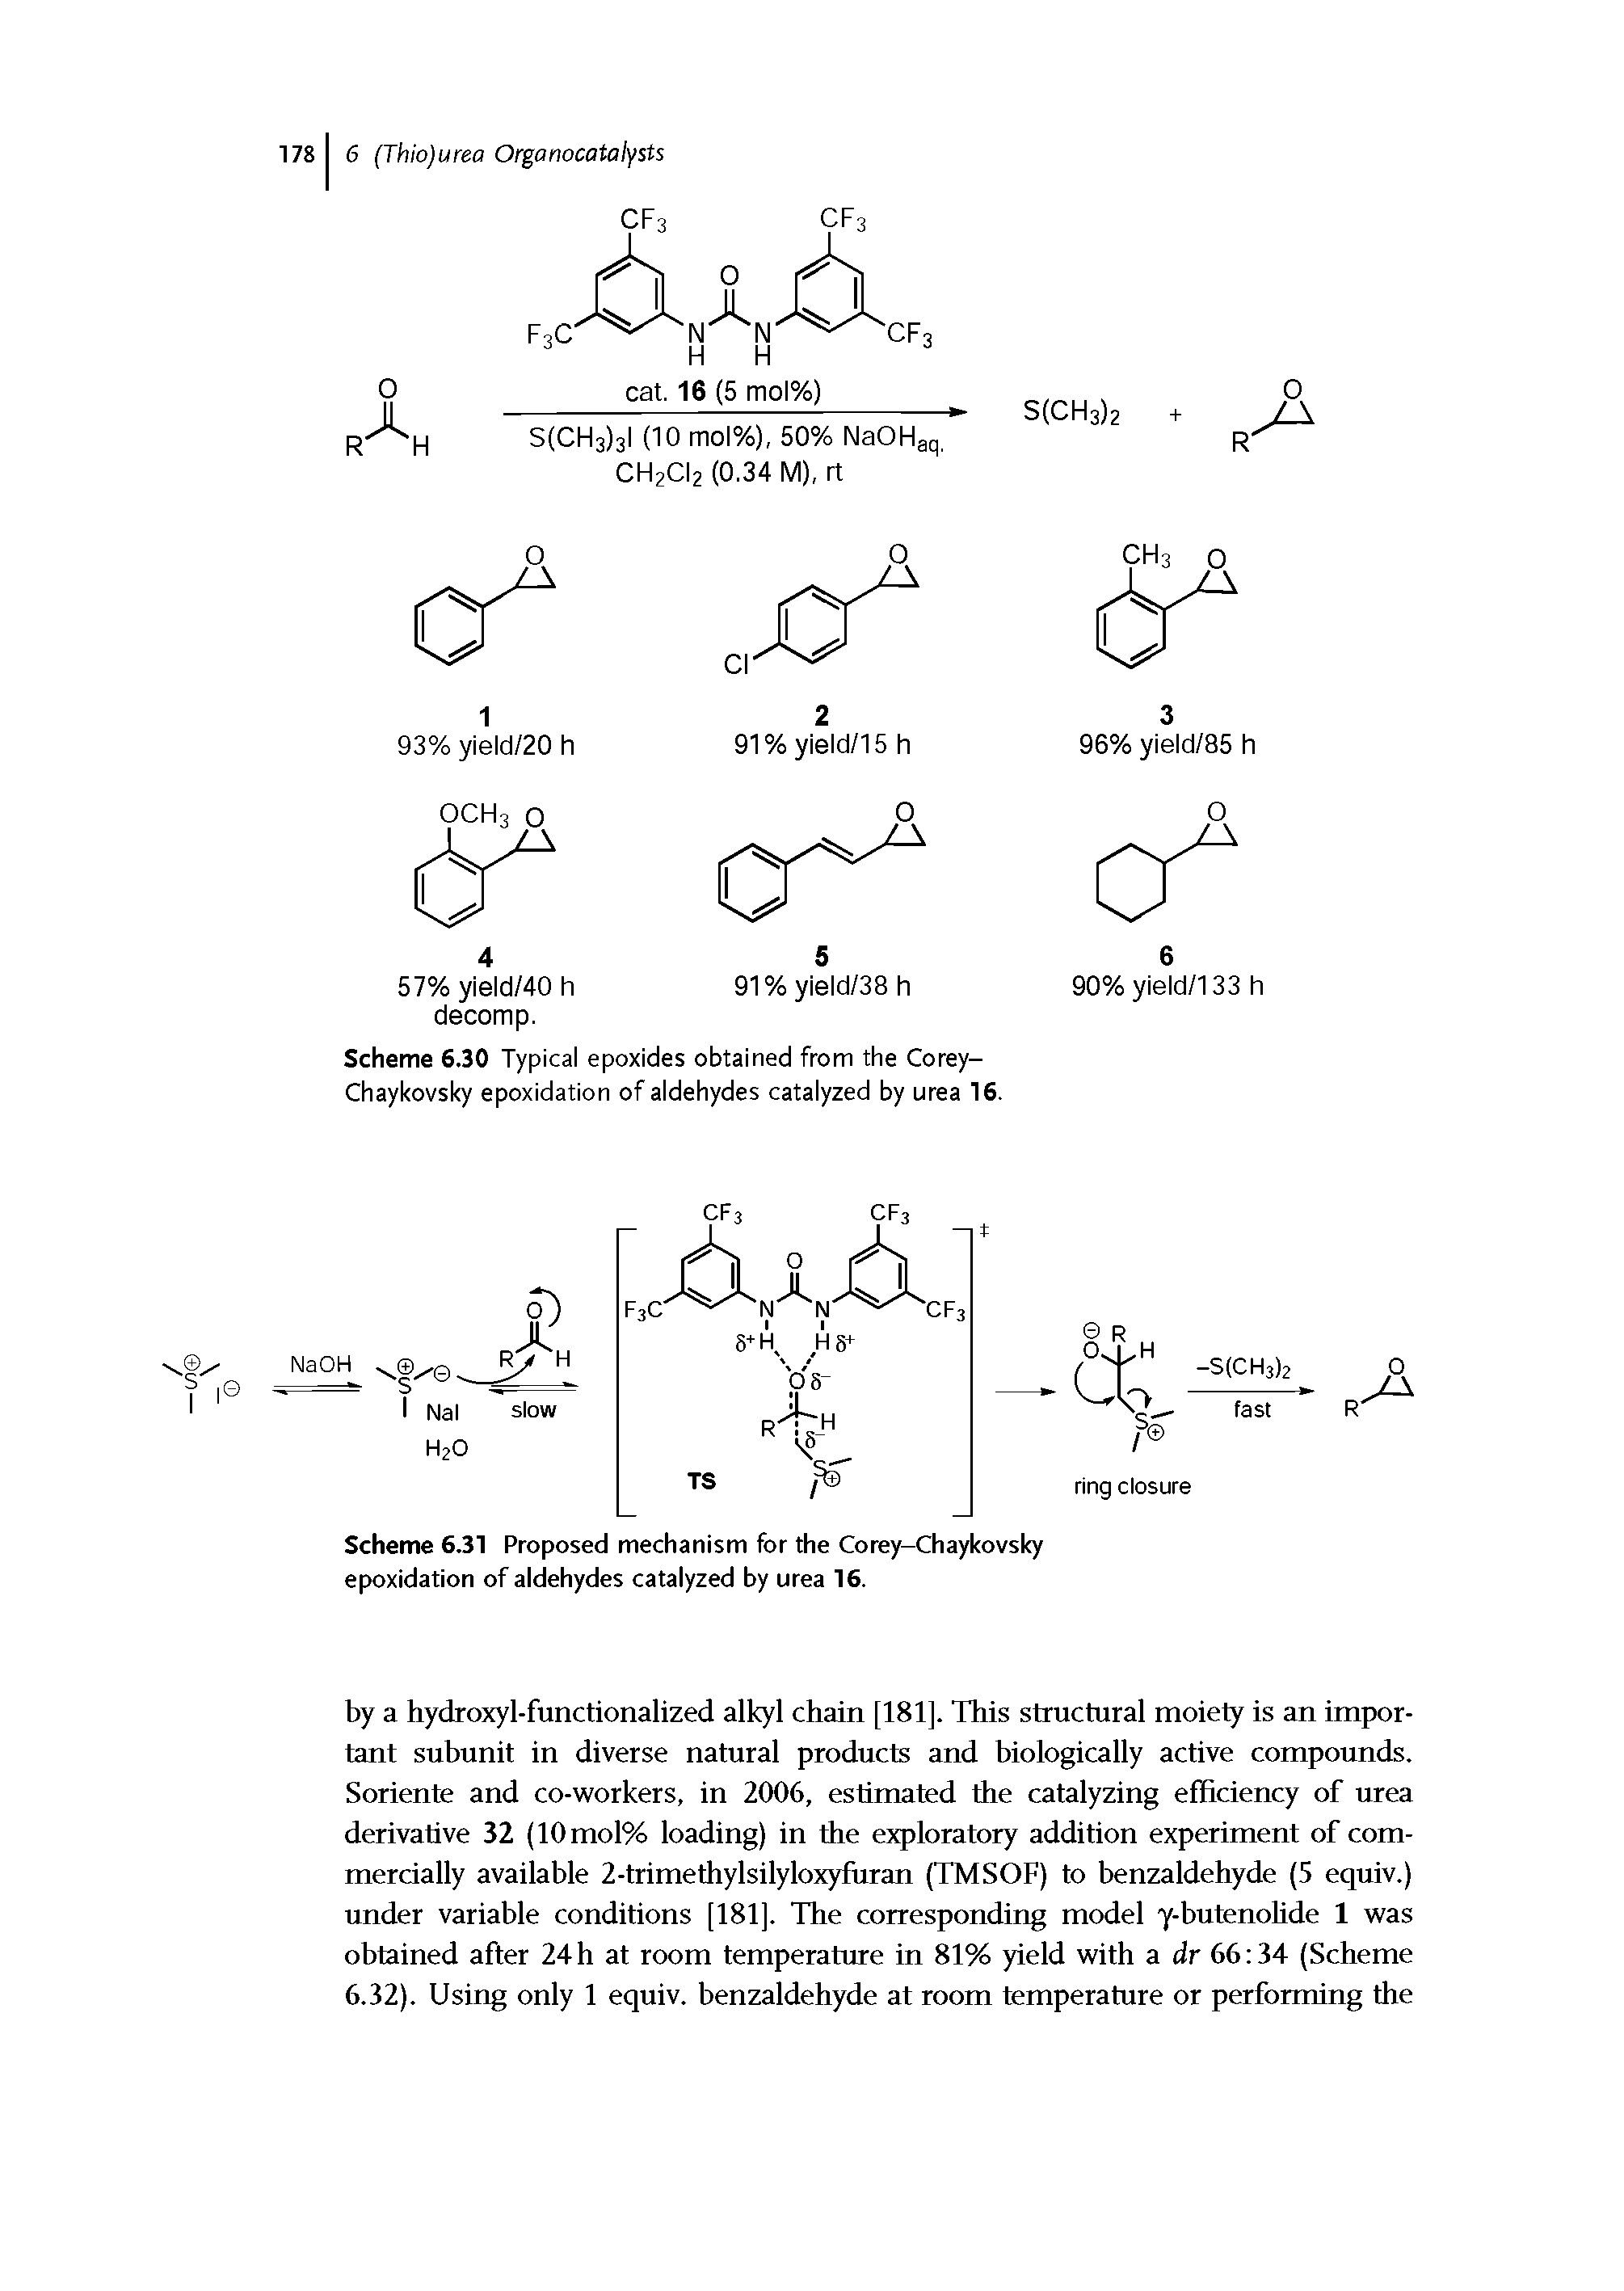 Scheme 6.30 Typical epoxides obtained from the Corey-Chaykovsky epoxidation of aldehydes catalyzed by urea 16.